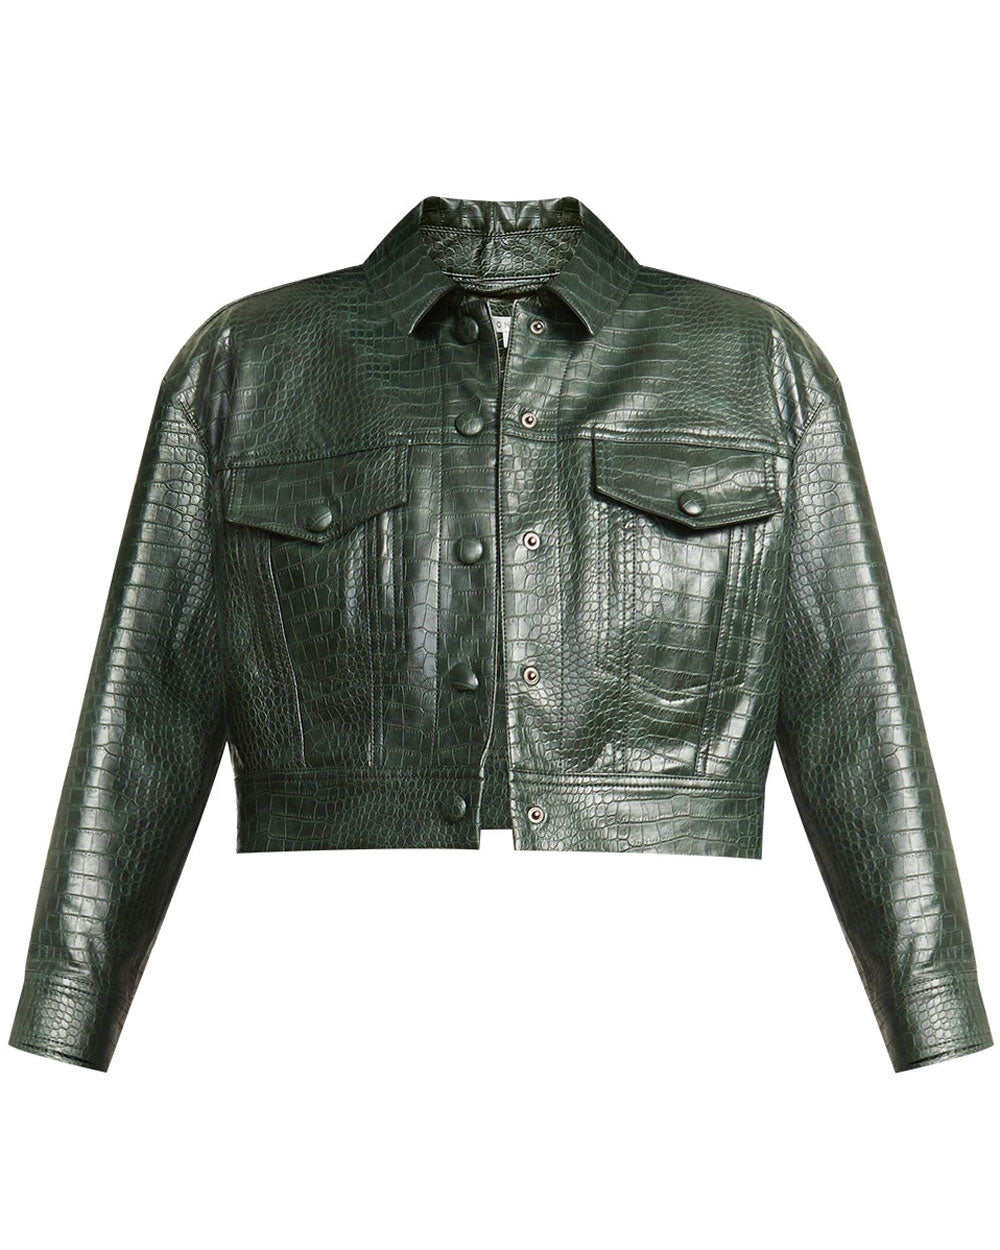 Evergreen Croc Embossed Vegan Leather Hendrix Jacket